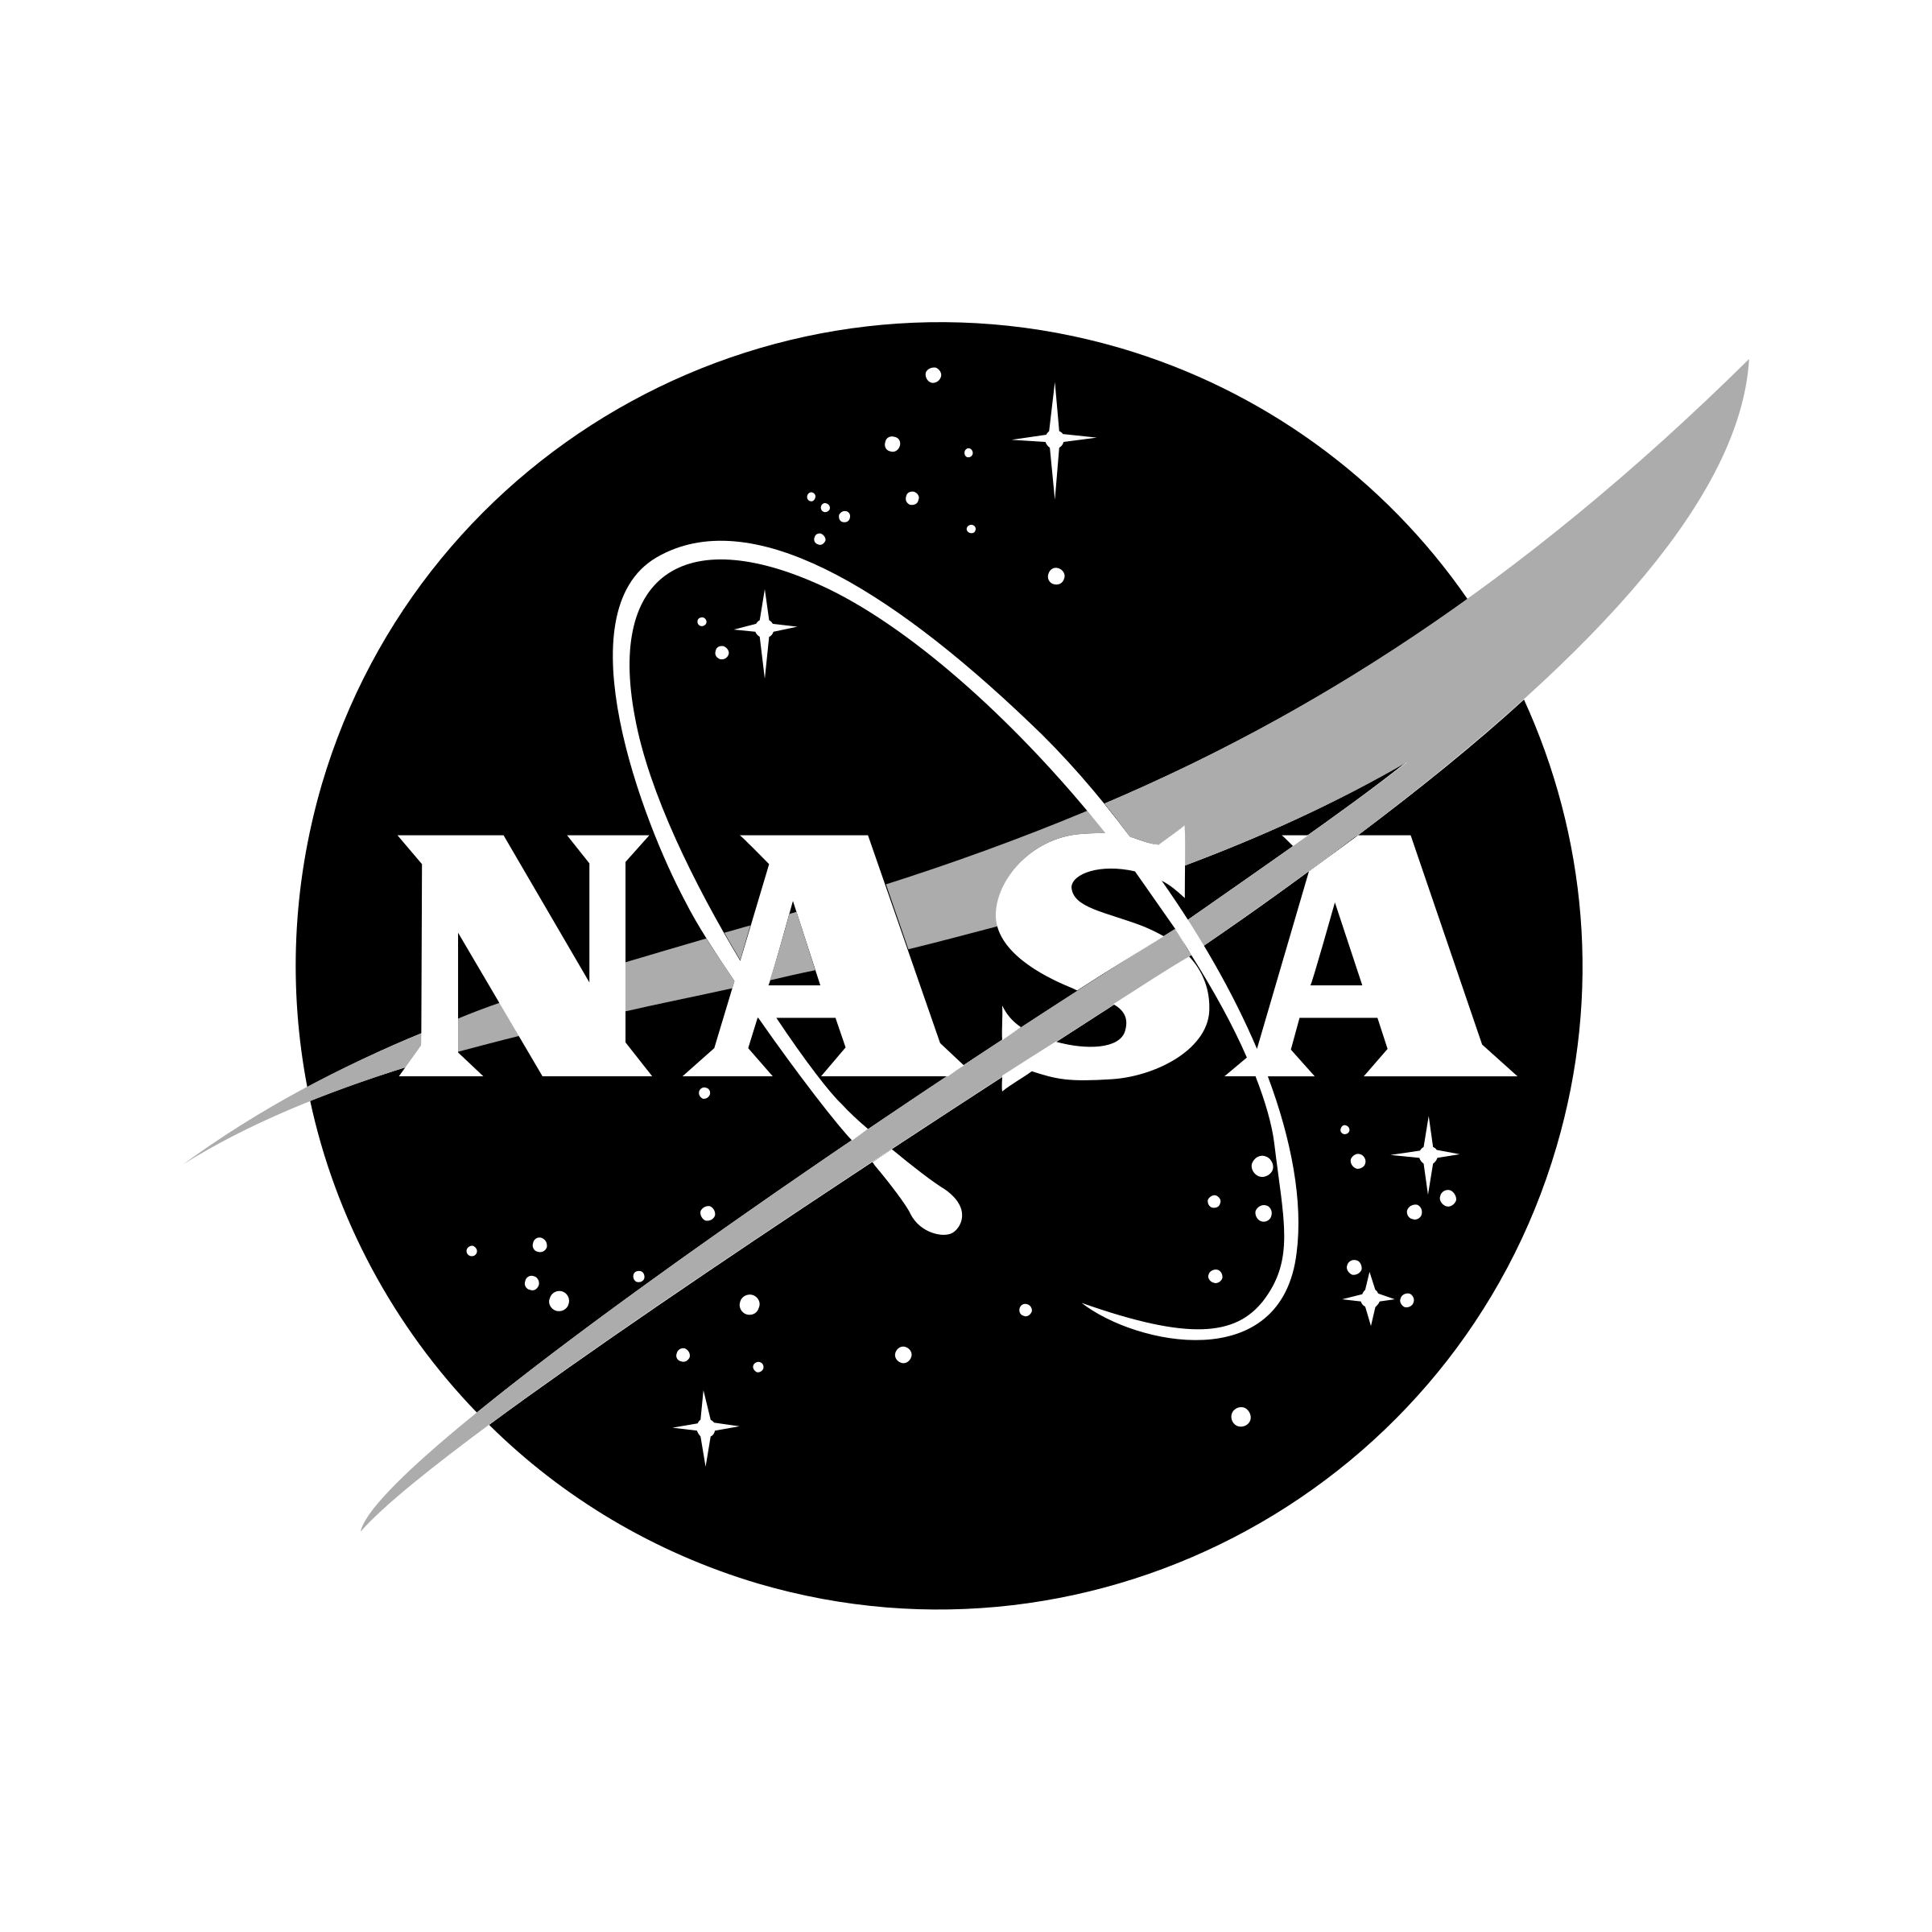 NASA Logo PNG High Quality Image